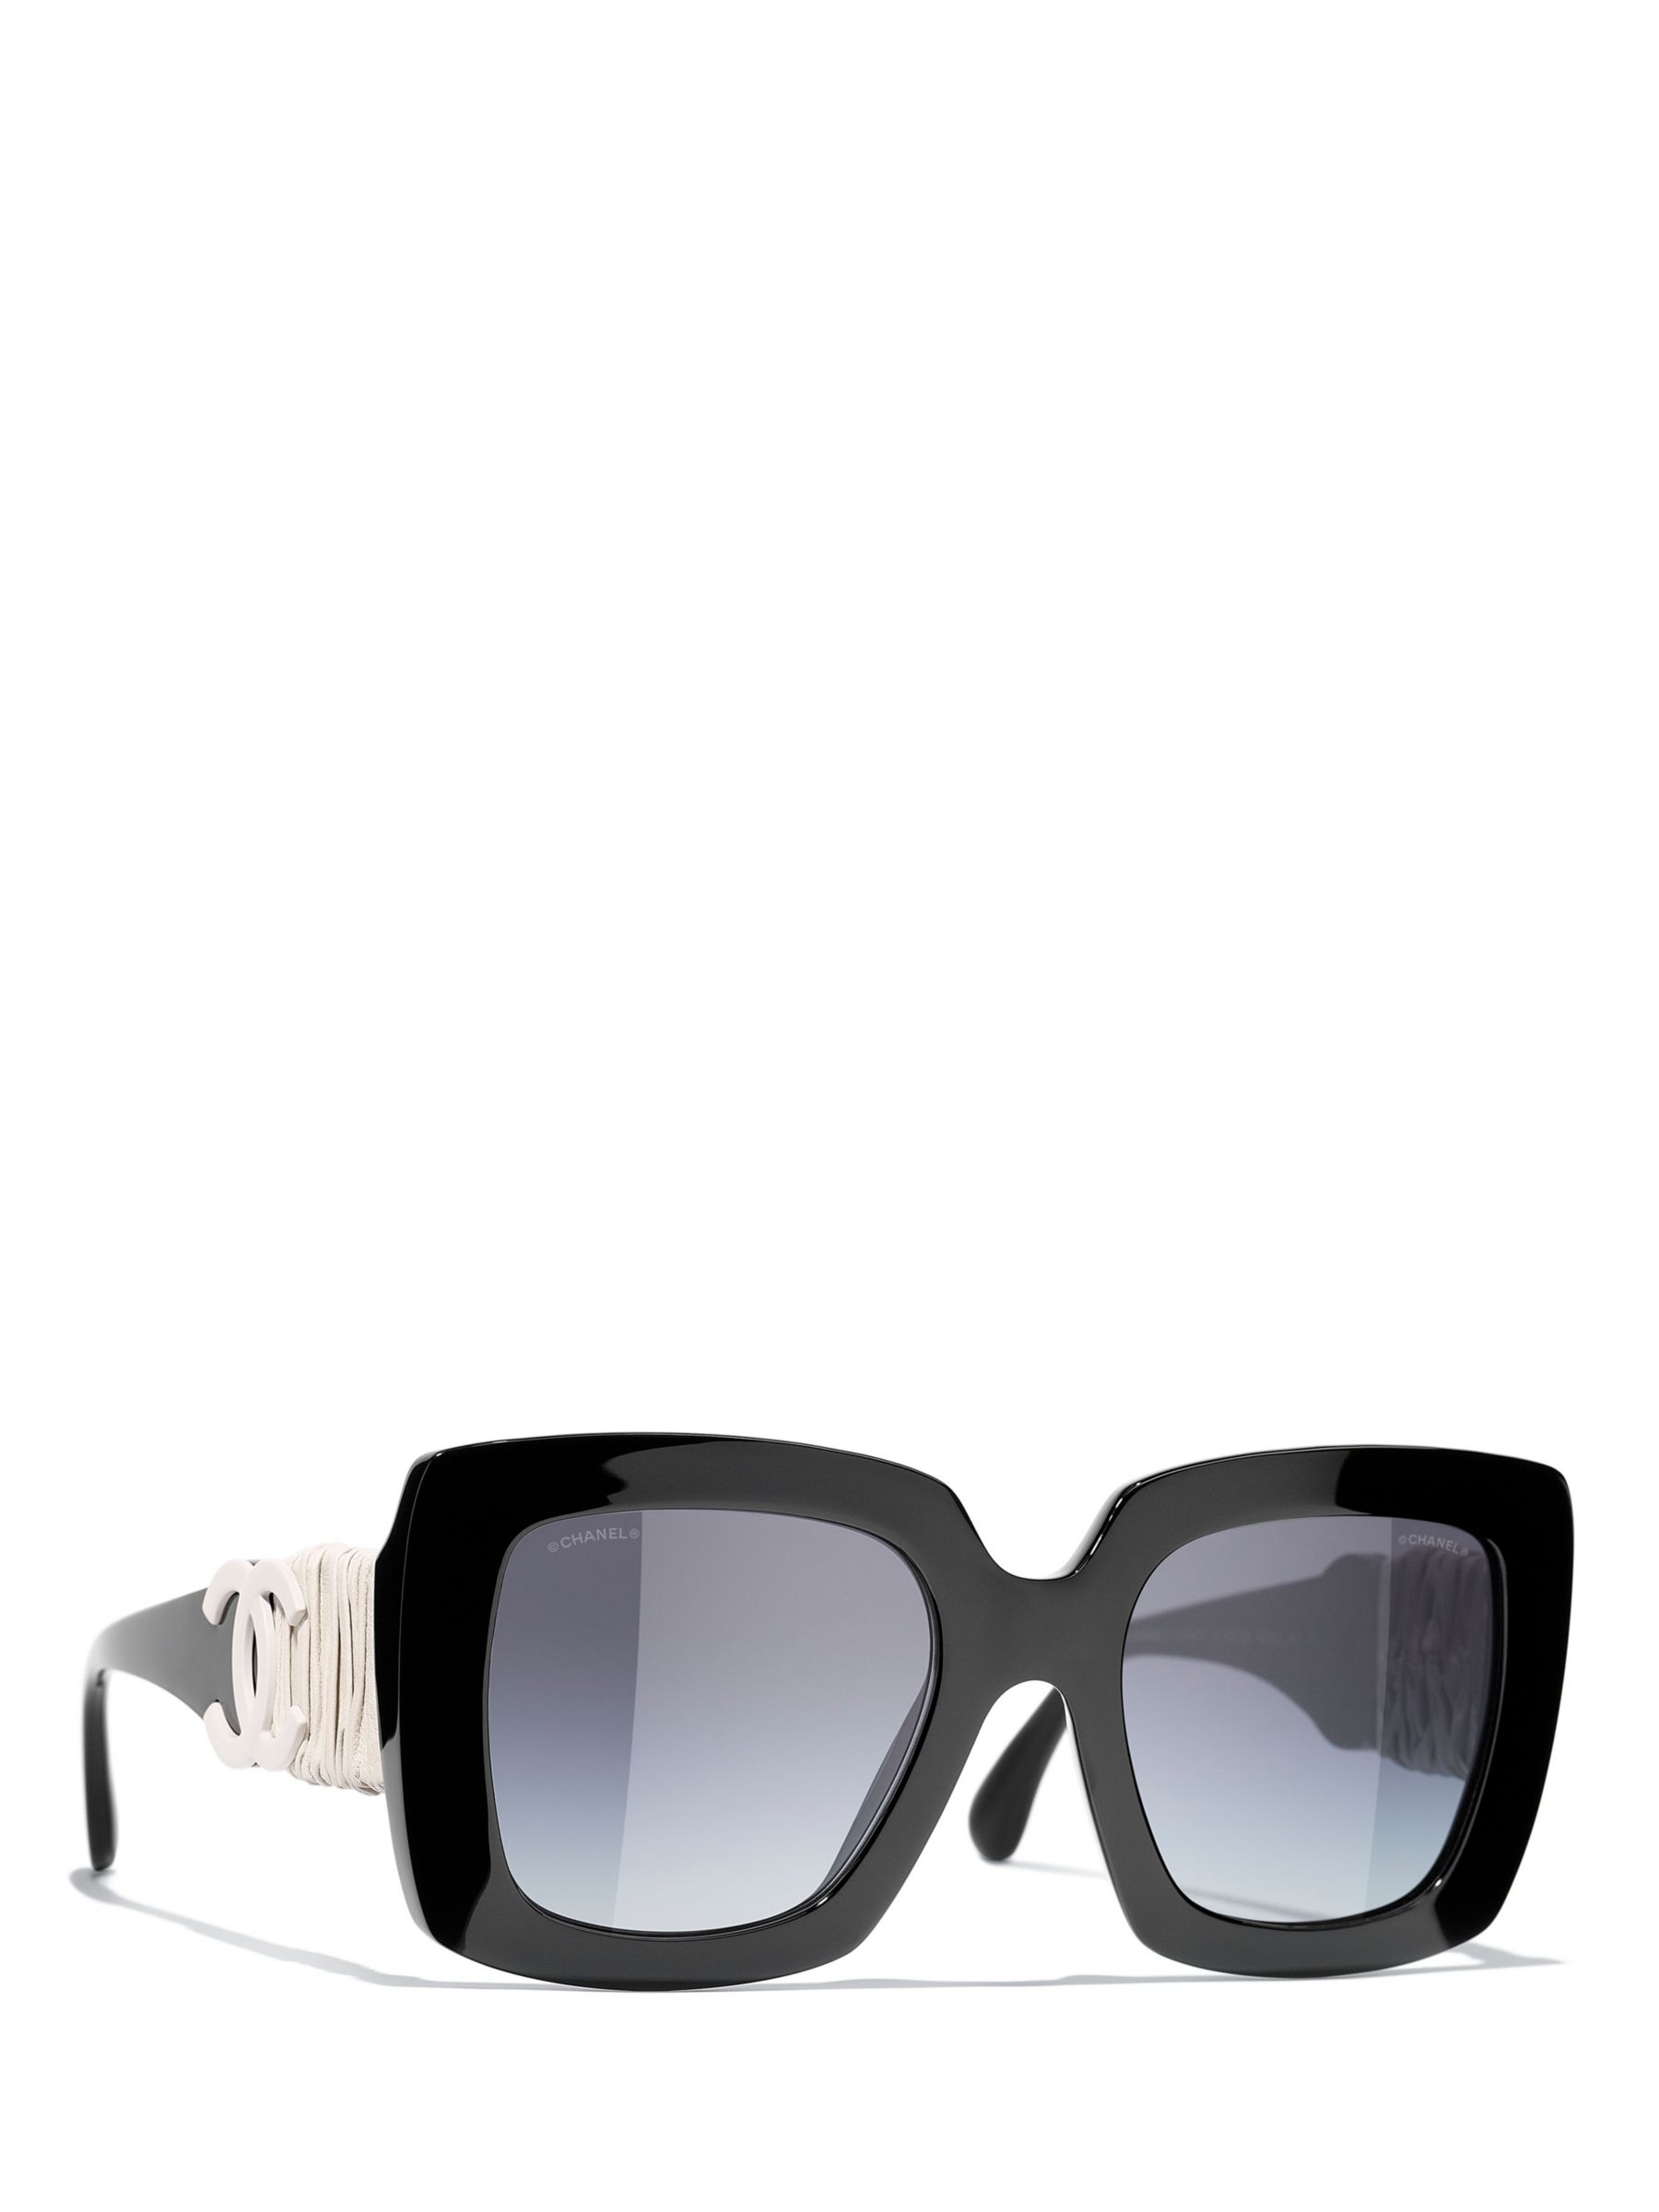 CHANEL Rectangular Sunglasses CH5474Q Black/Grey Gradient at John